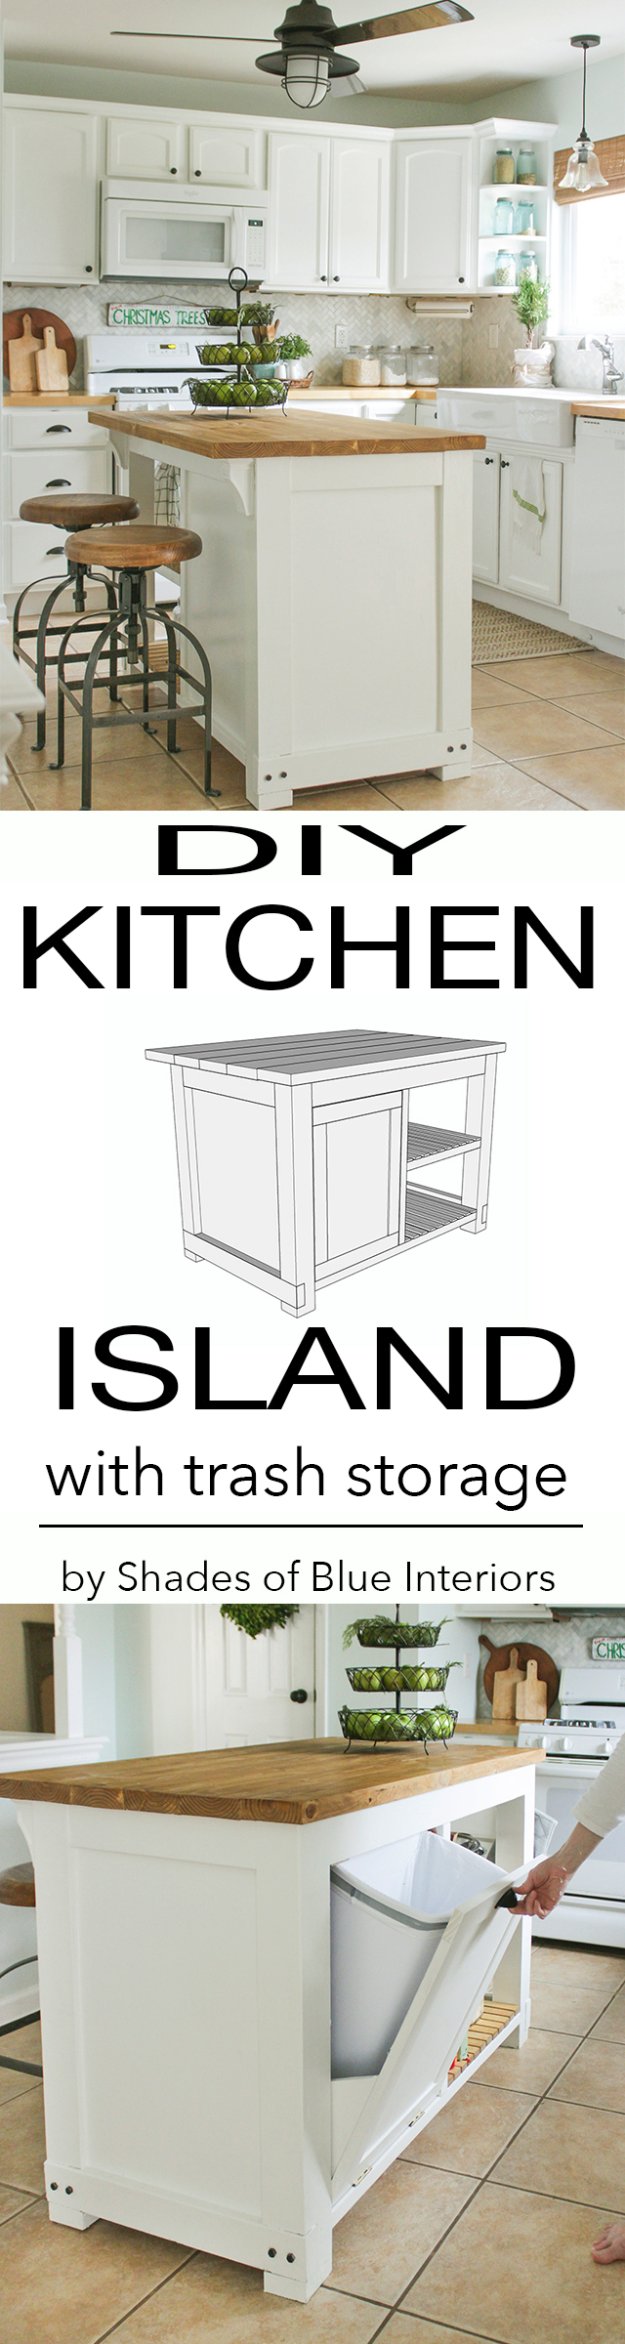 DIY Kitchen Decor Ideas - DIY Kitchen Island With Trash Storage - Creative Furniture Projects, Accessories, Countertop Ideas, Wall Art, Storage, Utensils, Towels and Rustic Furnishings http://diyjoy.com/diy-kitchen-decor-ideas